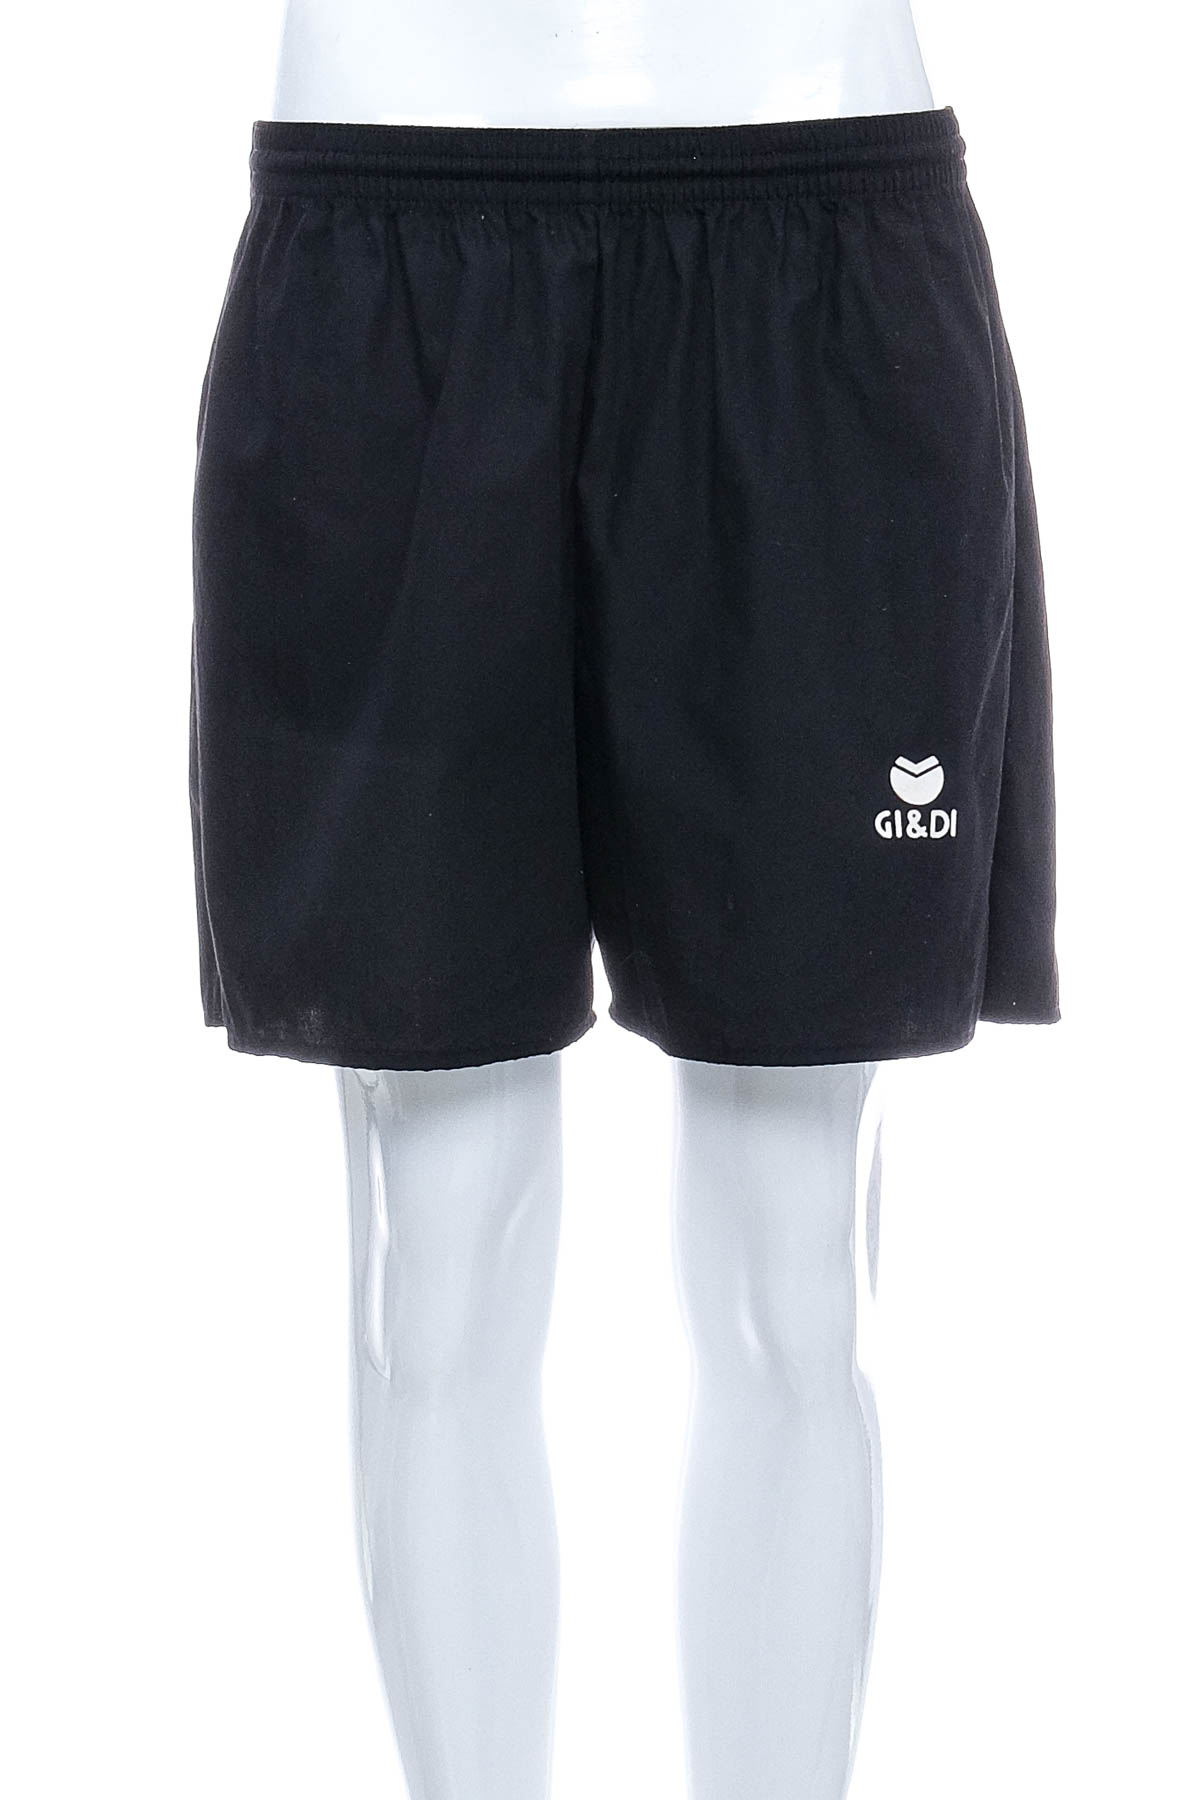 Female shorts - GI & DI - 0